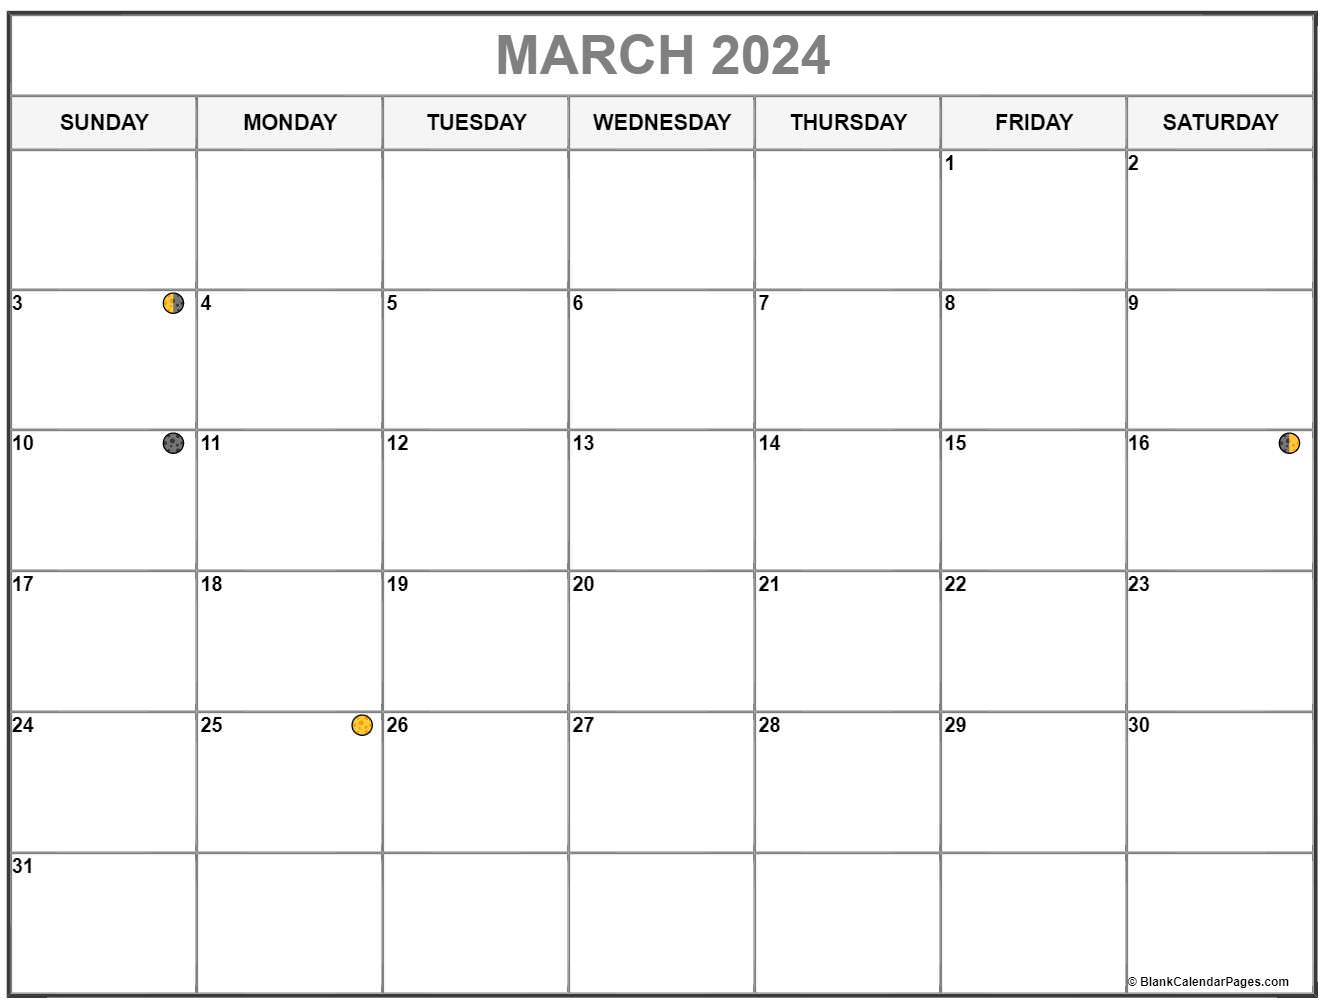 lunar calendar 2023 usa Calendar march 2023 lunar moon phase printable